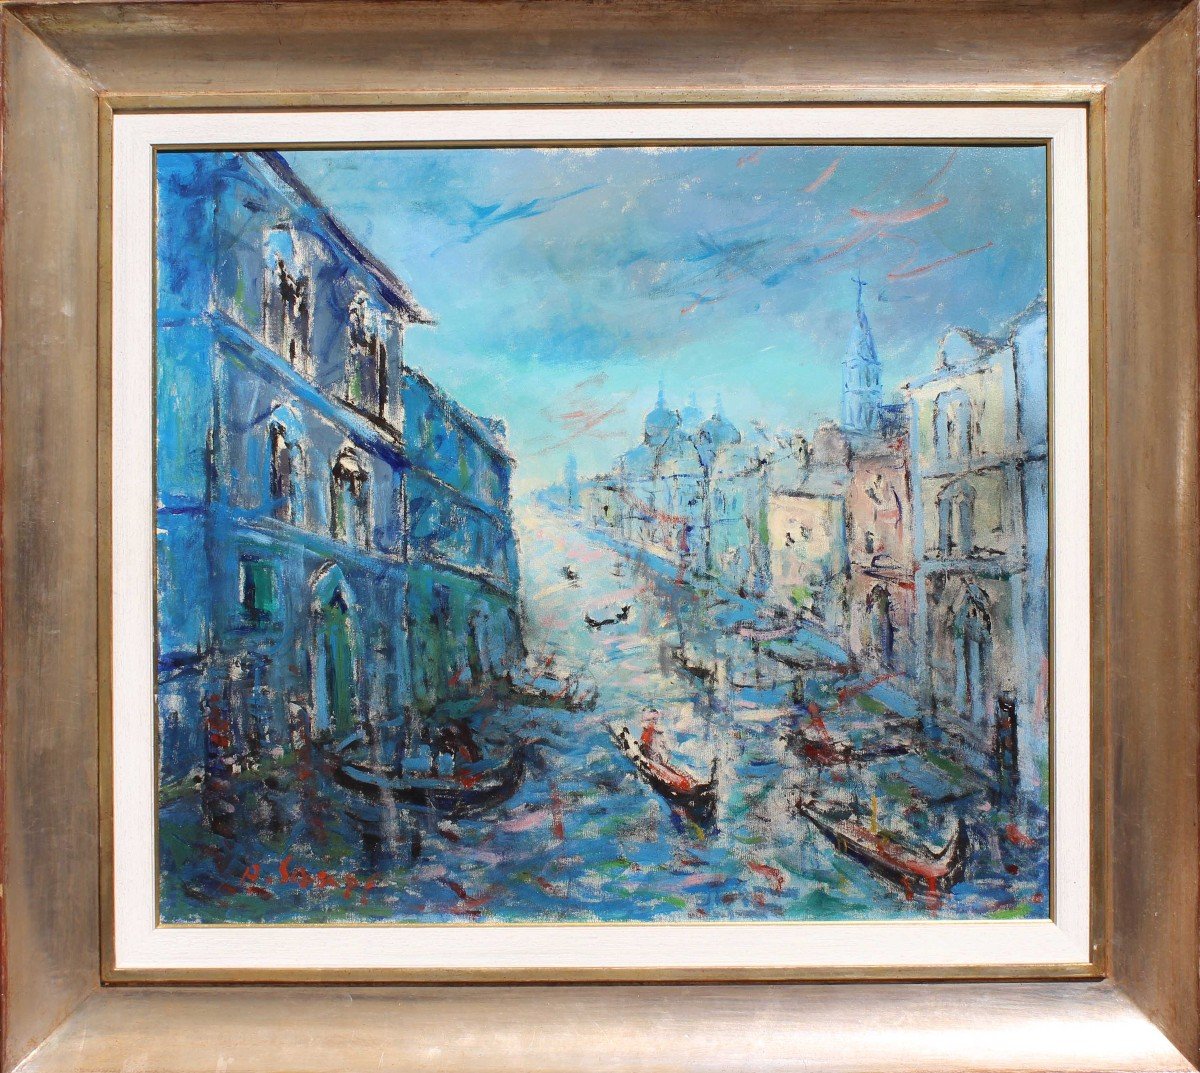 Venise, Armando Santi (1925 - 2015)